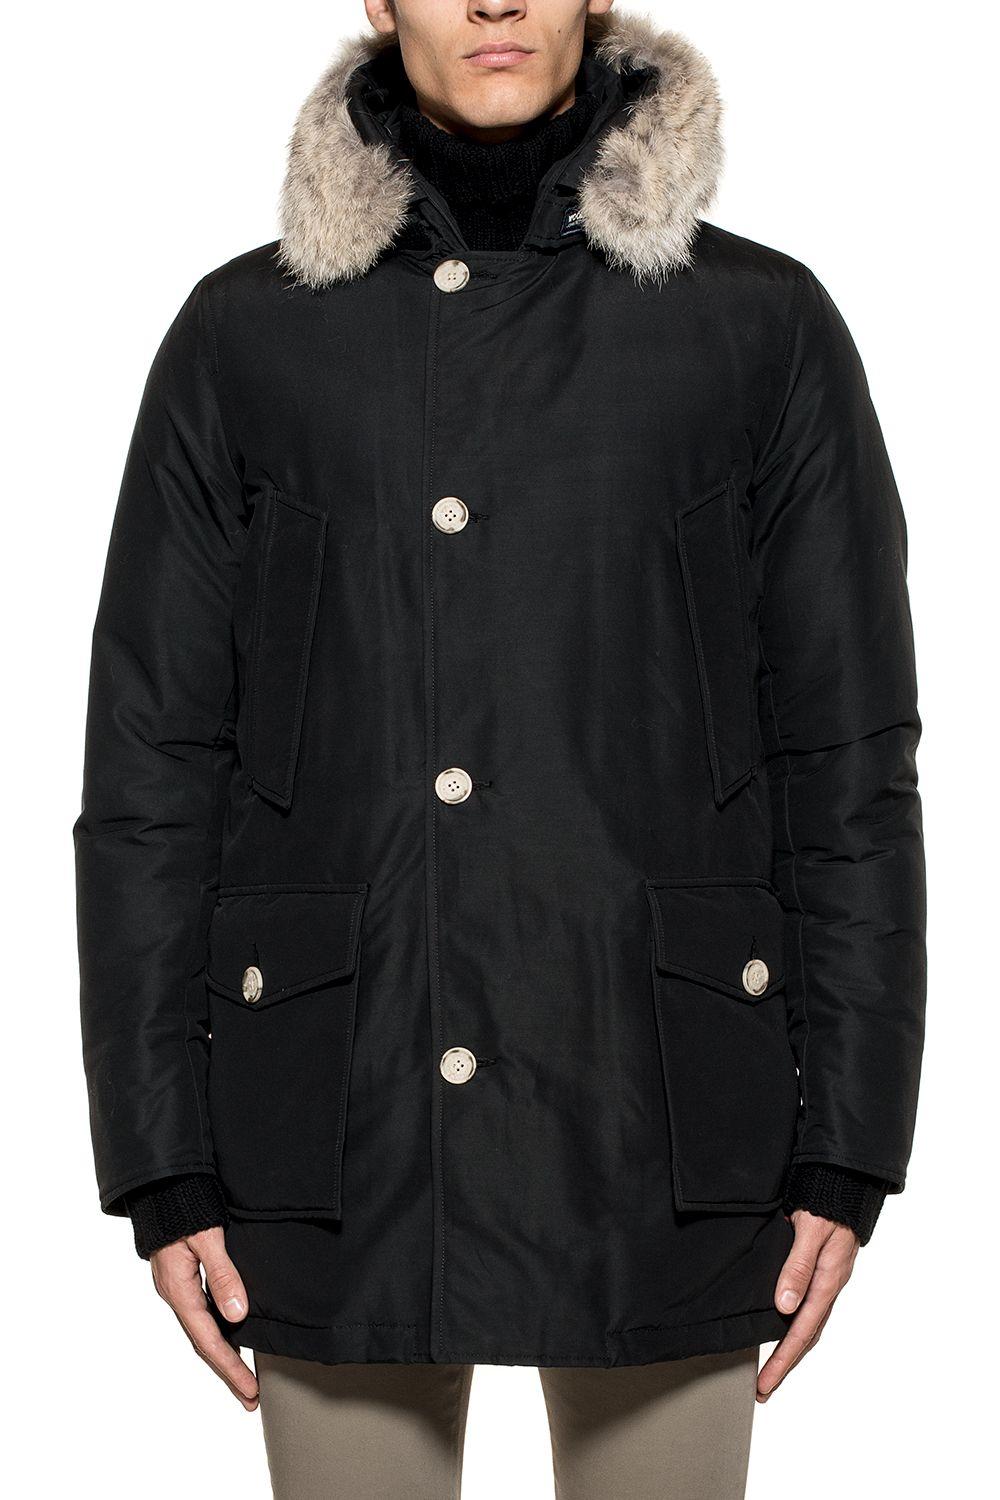 Woolrich Black Cotton Outerwear Jacket for Men - Lyst